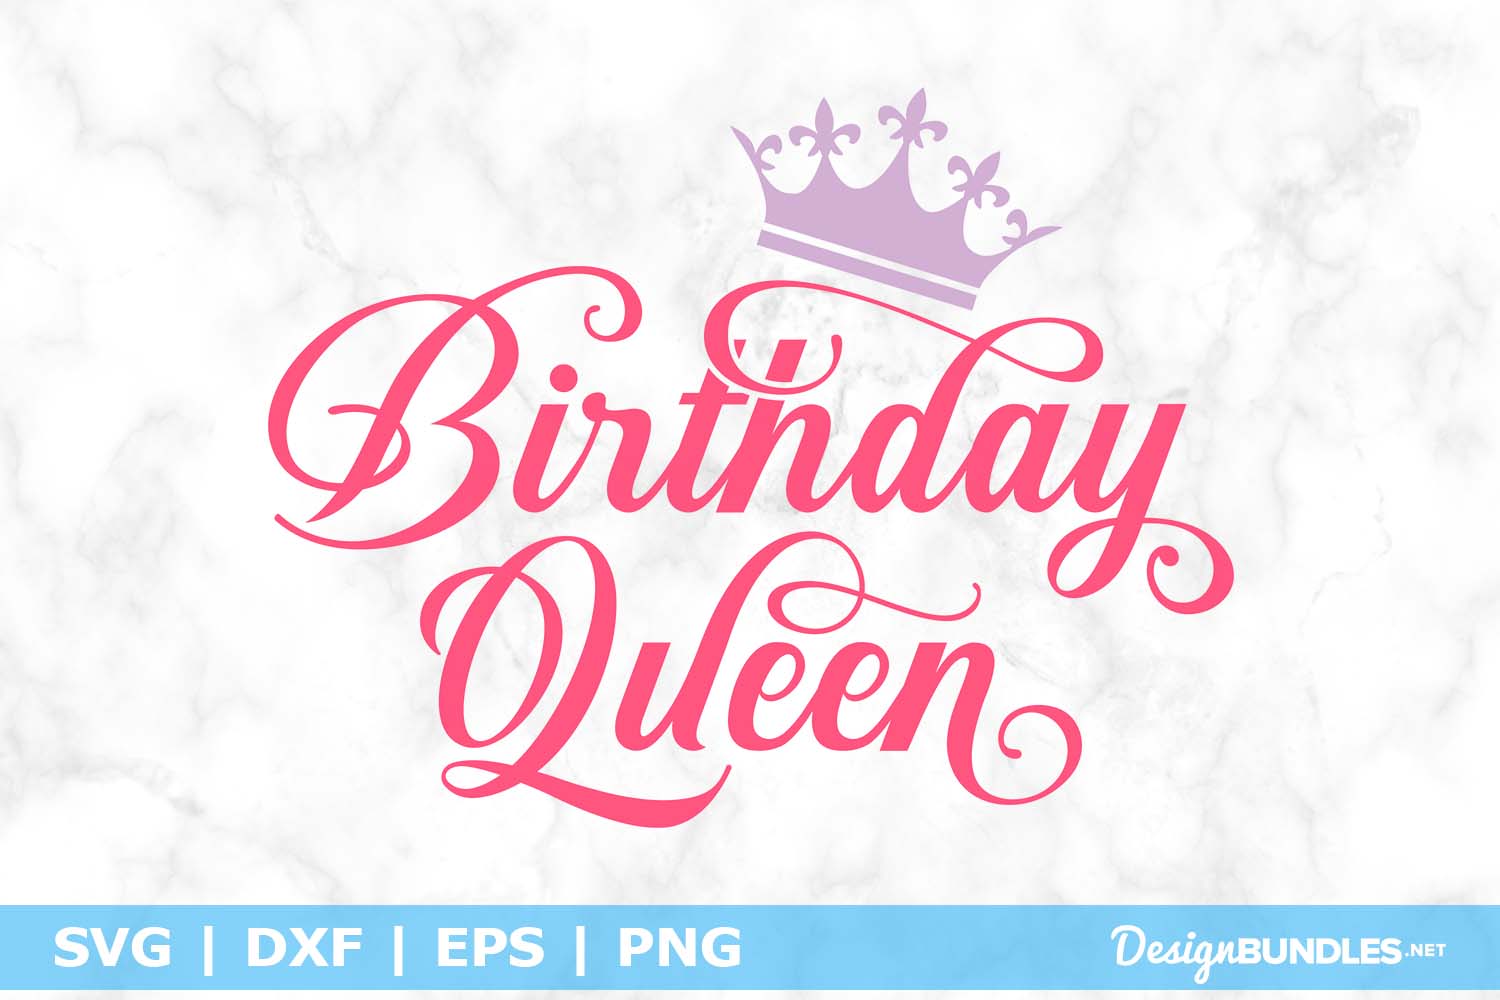 Download Birthday Queen SVG File